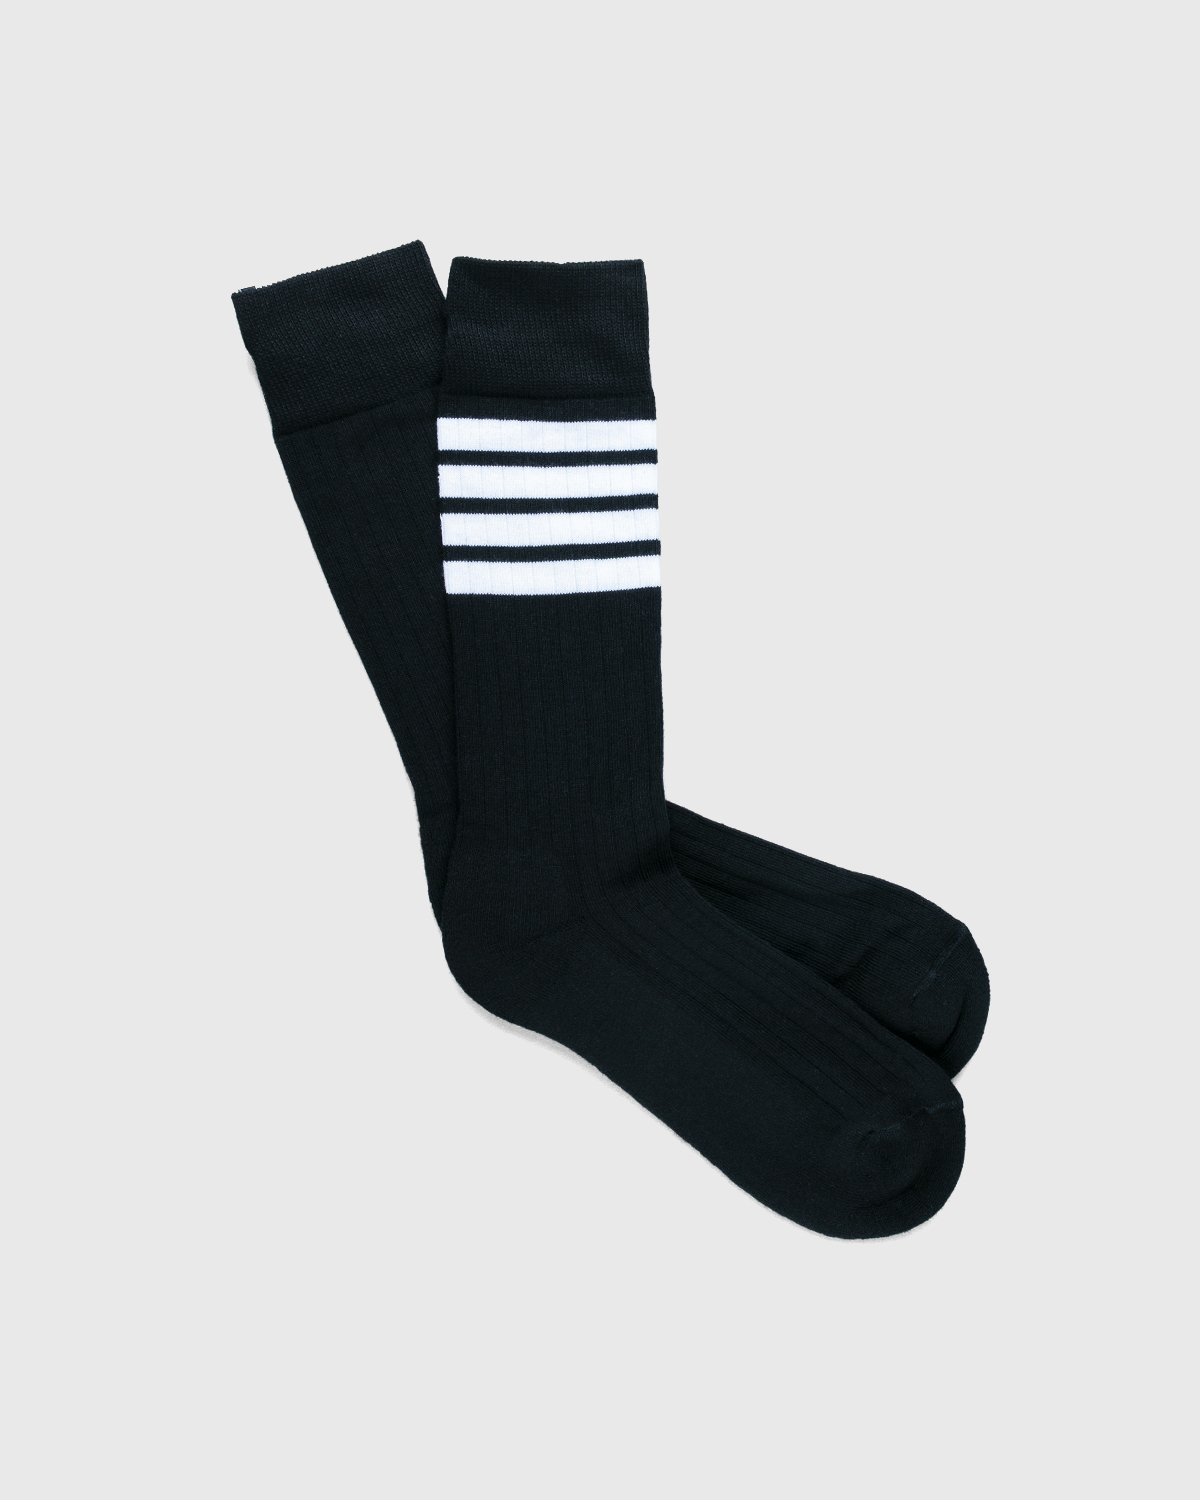 Thom Browne x Highsnobiety - Men's Mid-Calf Socks Grey - Accessories - Grey - Image 3